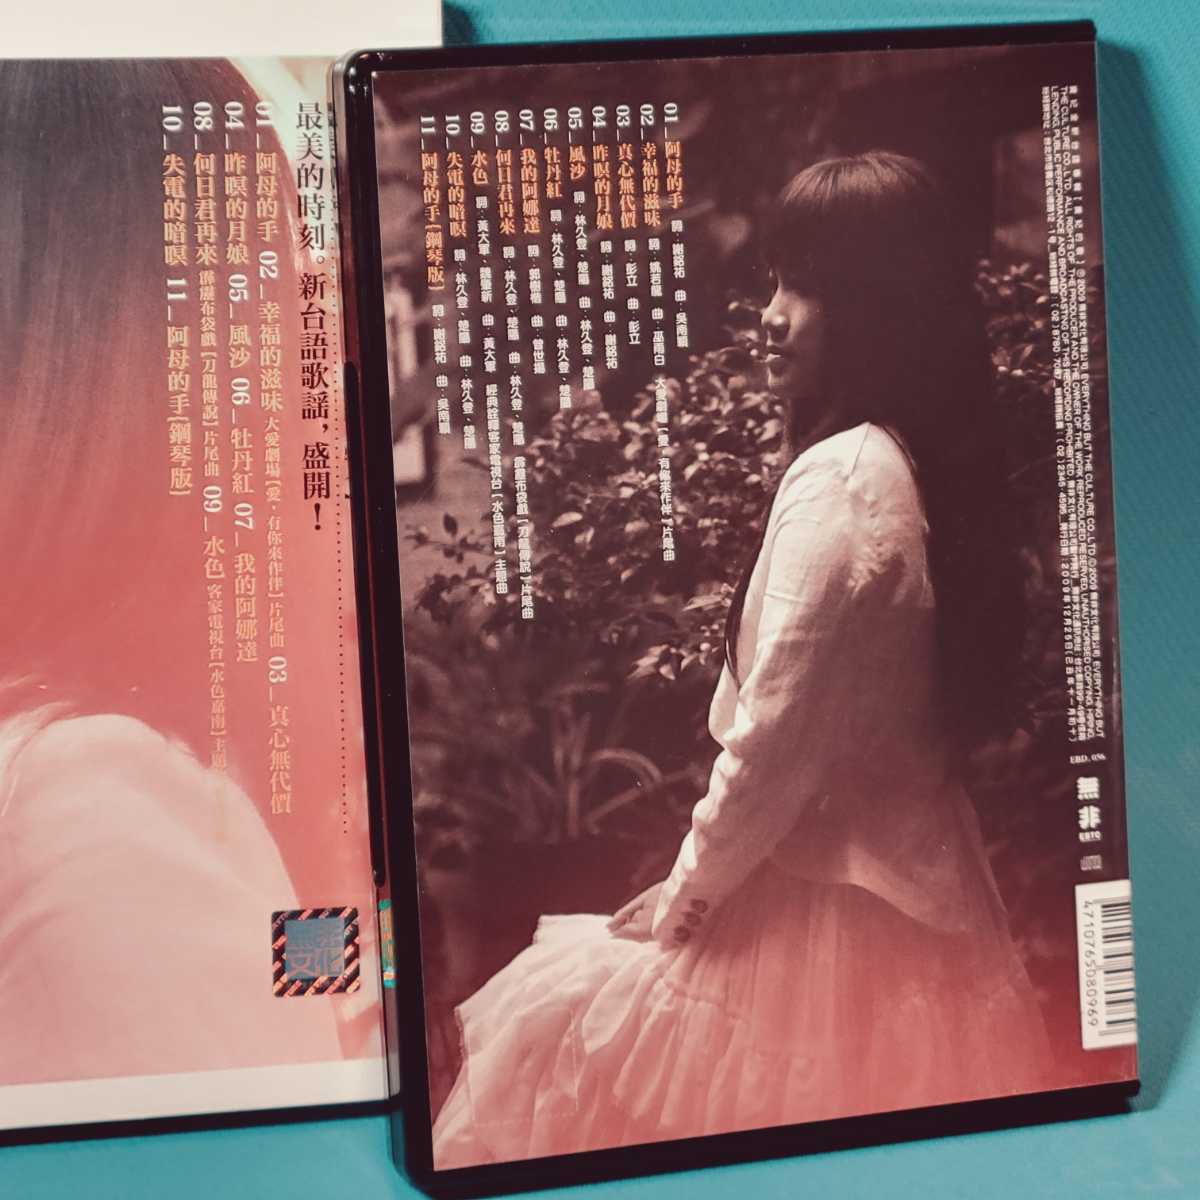  редкость трудно найти * желтый .( ho Anne *fei)[ желтый ...( Taiwan версия )] CD 1 листов комплект 